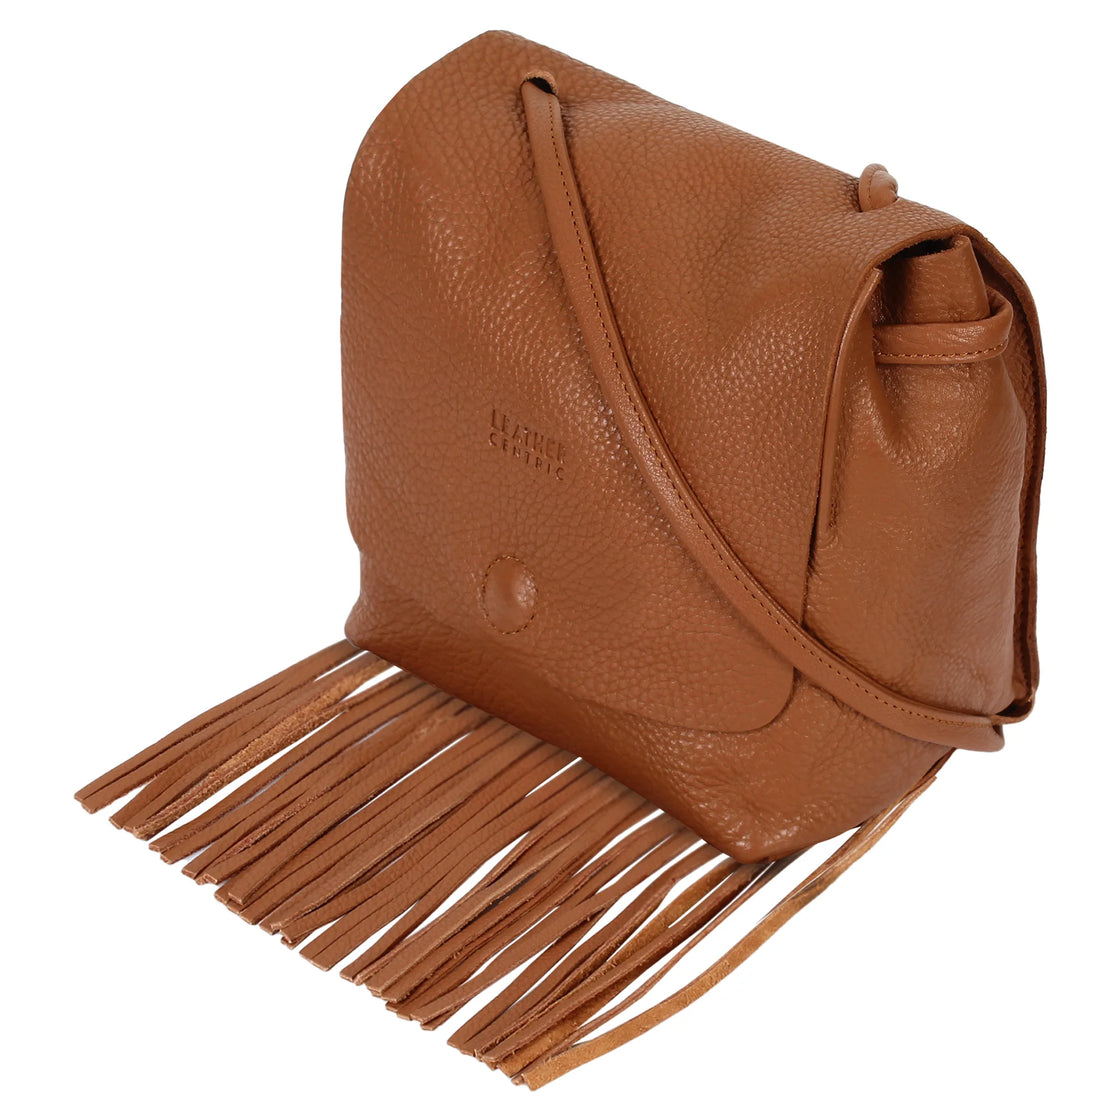 Bohemian Tassel Leather Bag, Pu Leather Messenger Bag